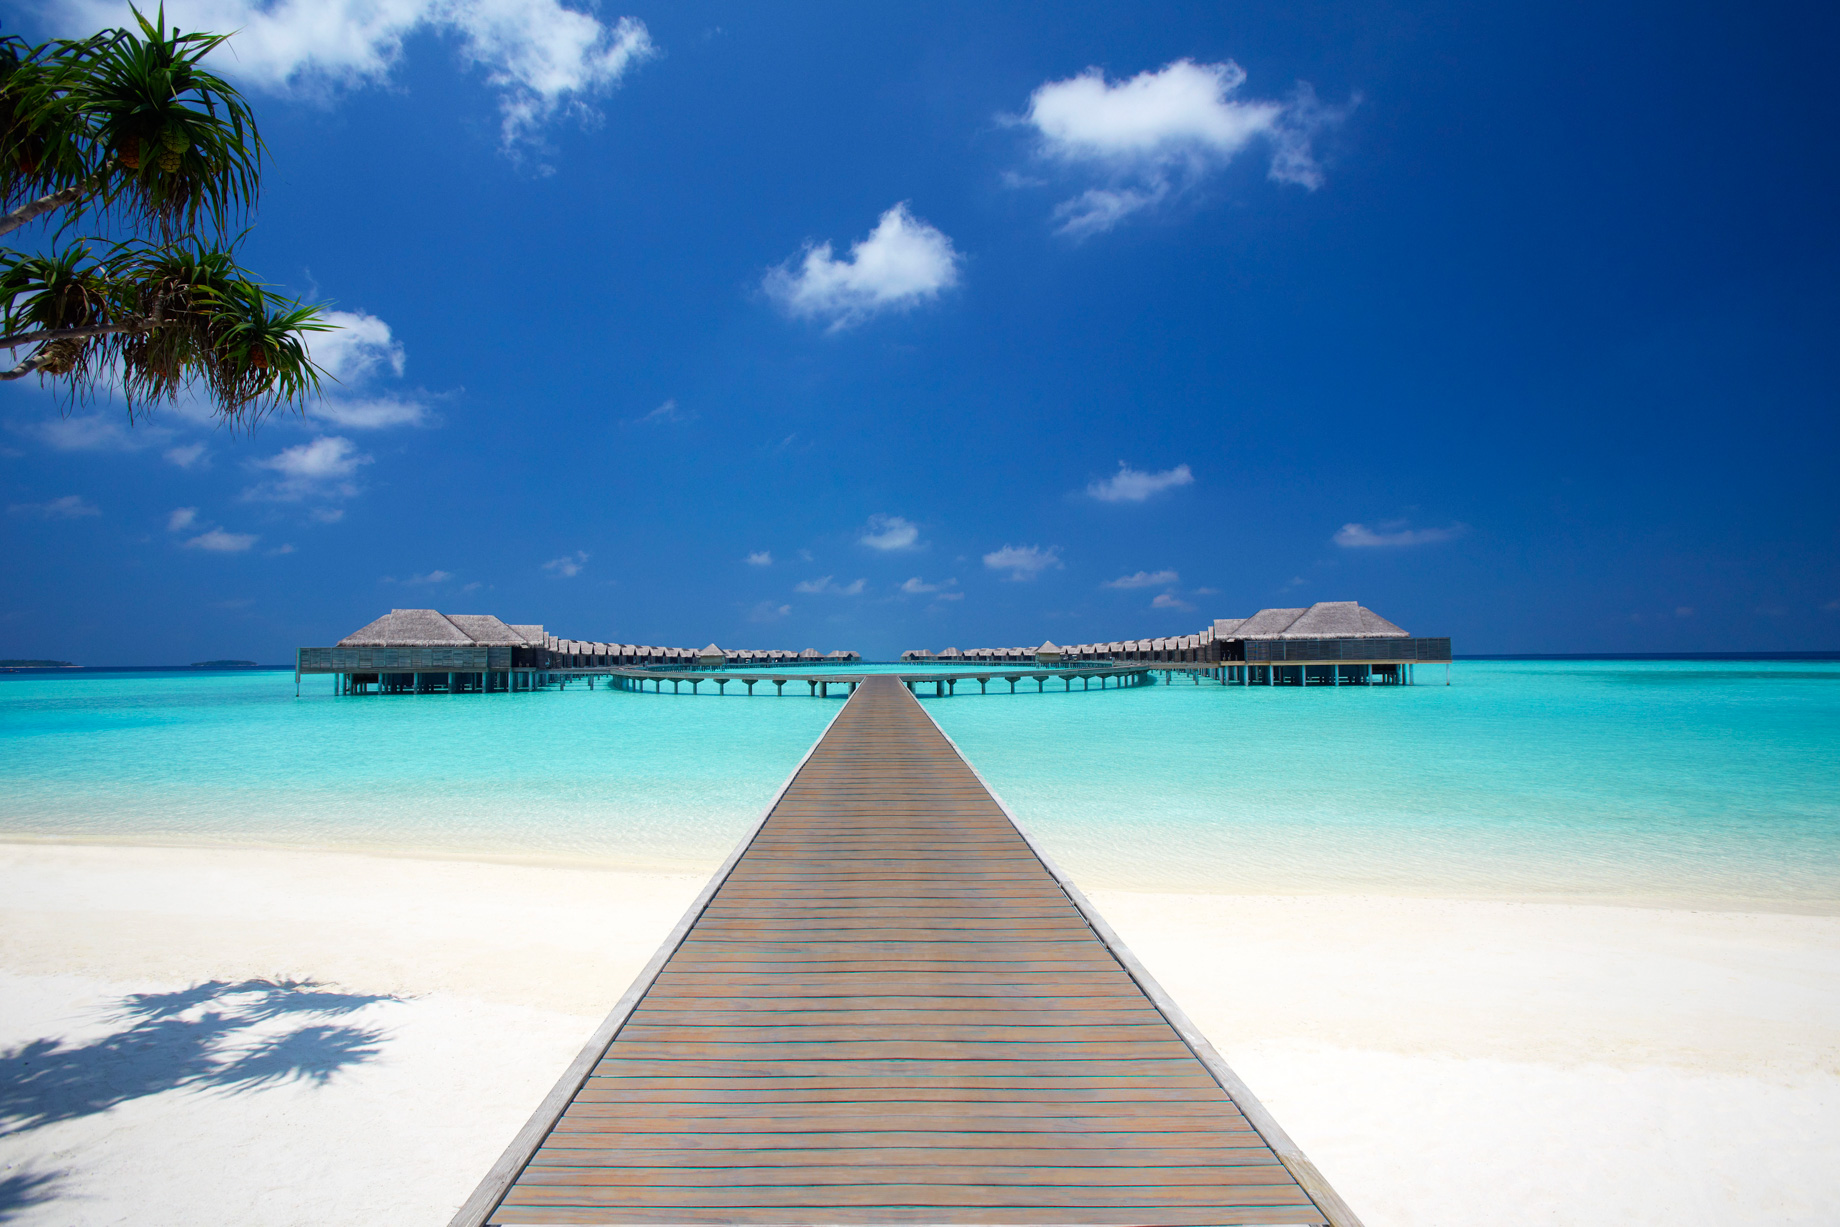 Anantara Kihavah Maldives Villas Resort – Baa Atoll, Maldives – Overwater Villas Jetty Ocean View